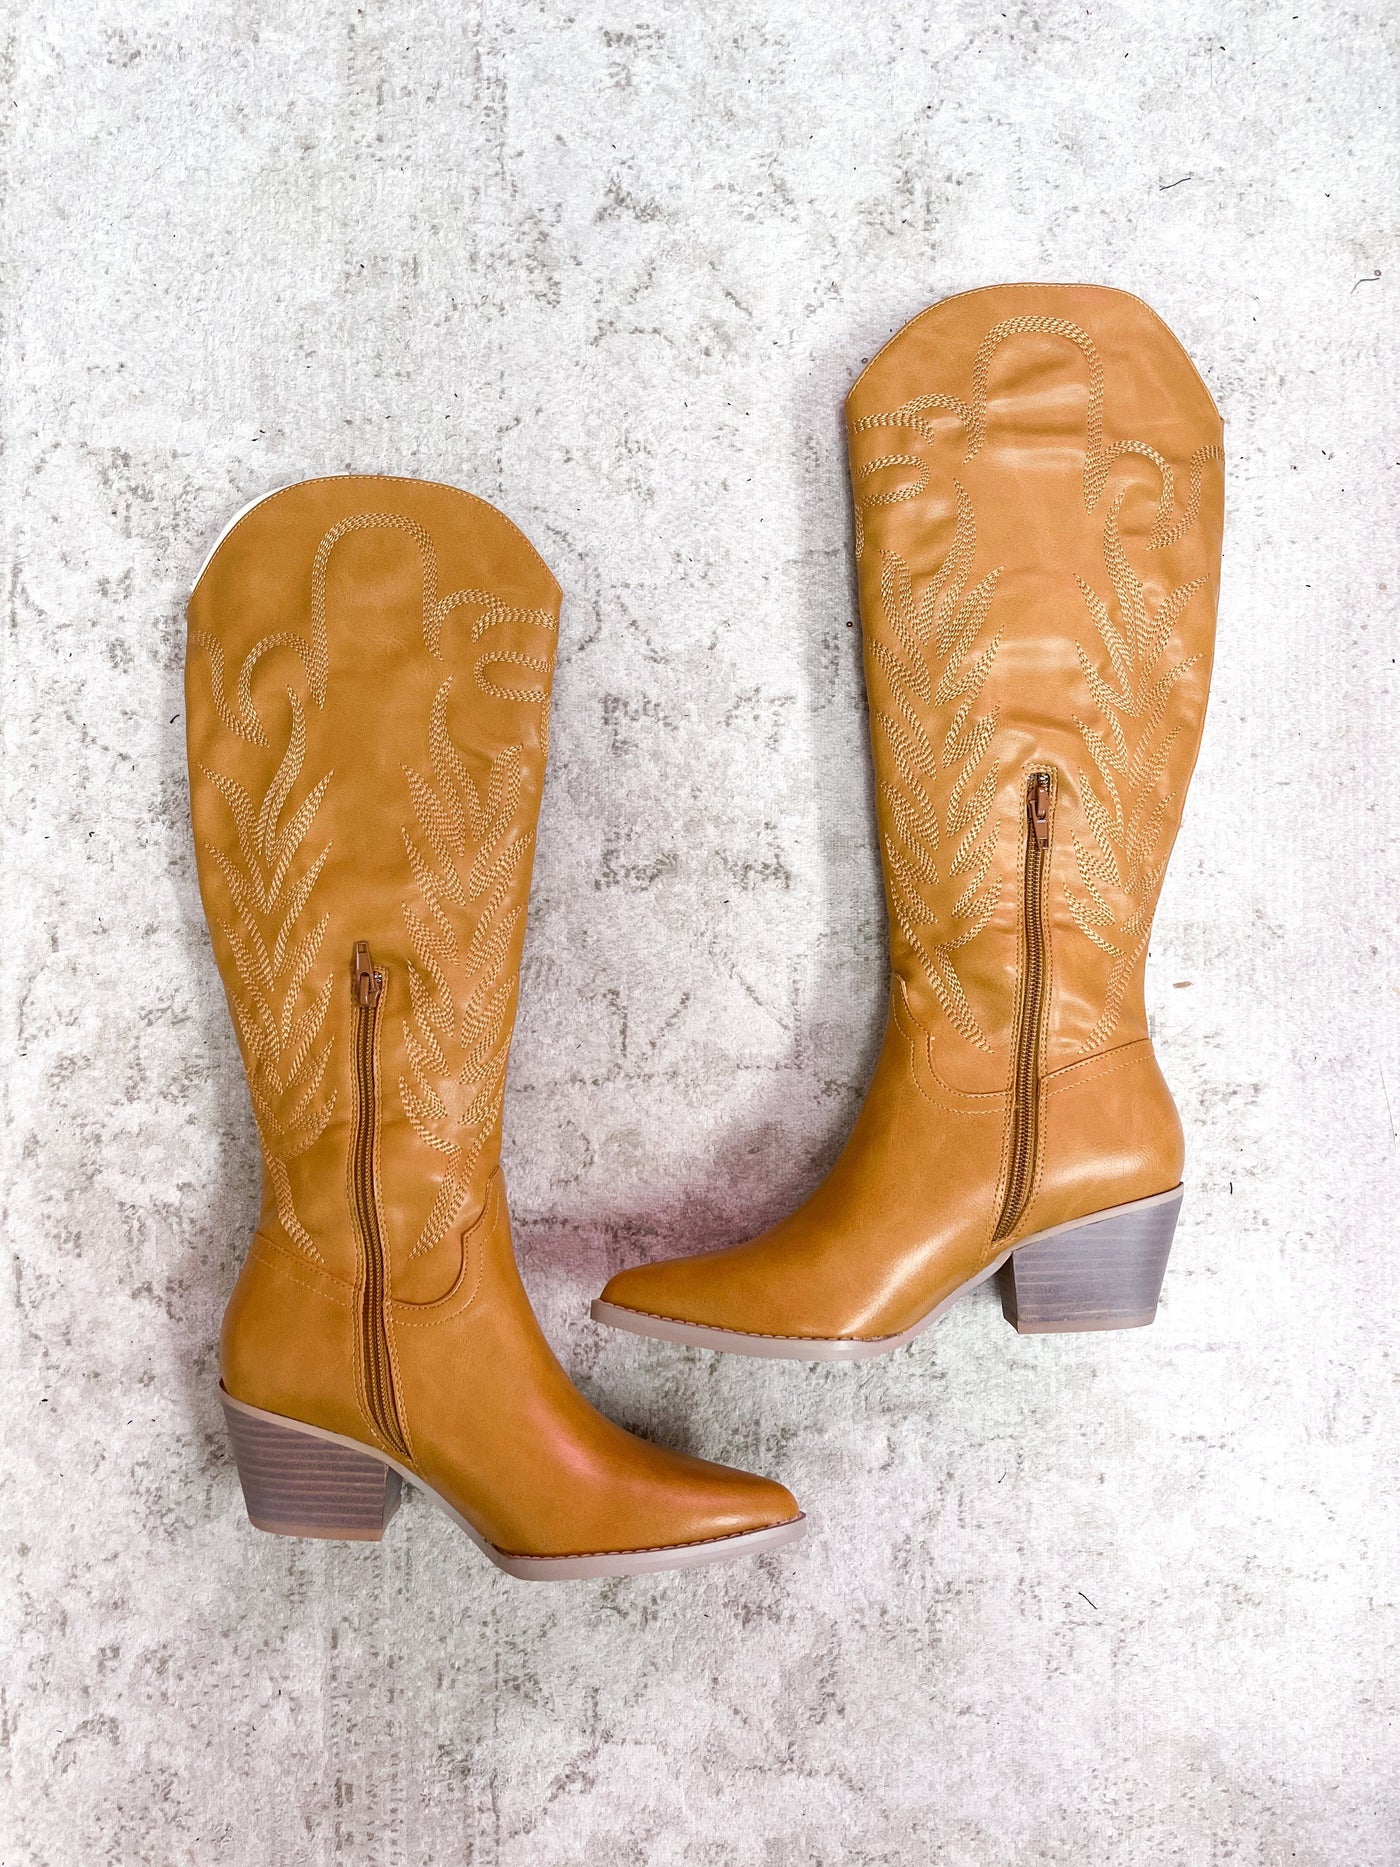 Samara Knee High Cowboy Boots: Camel - Bella and Bloom Boutique